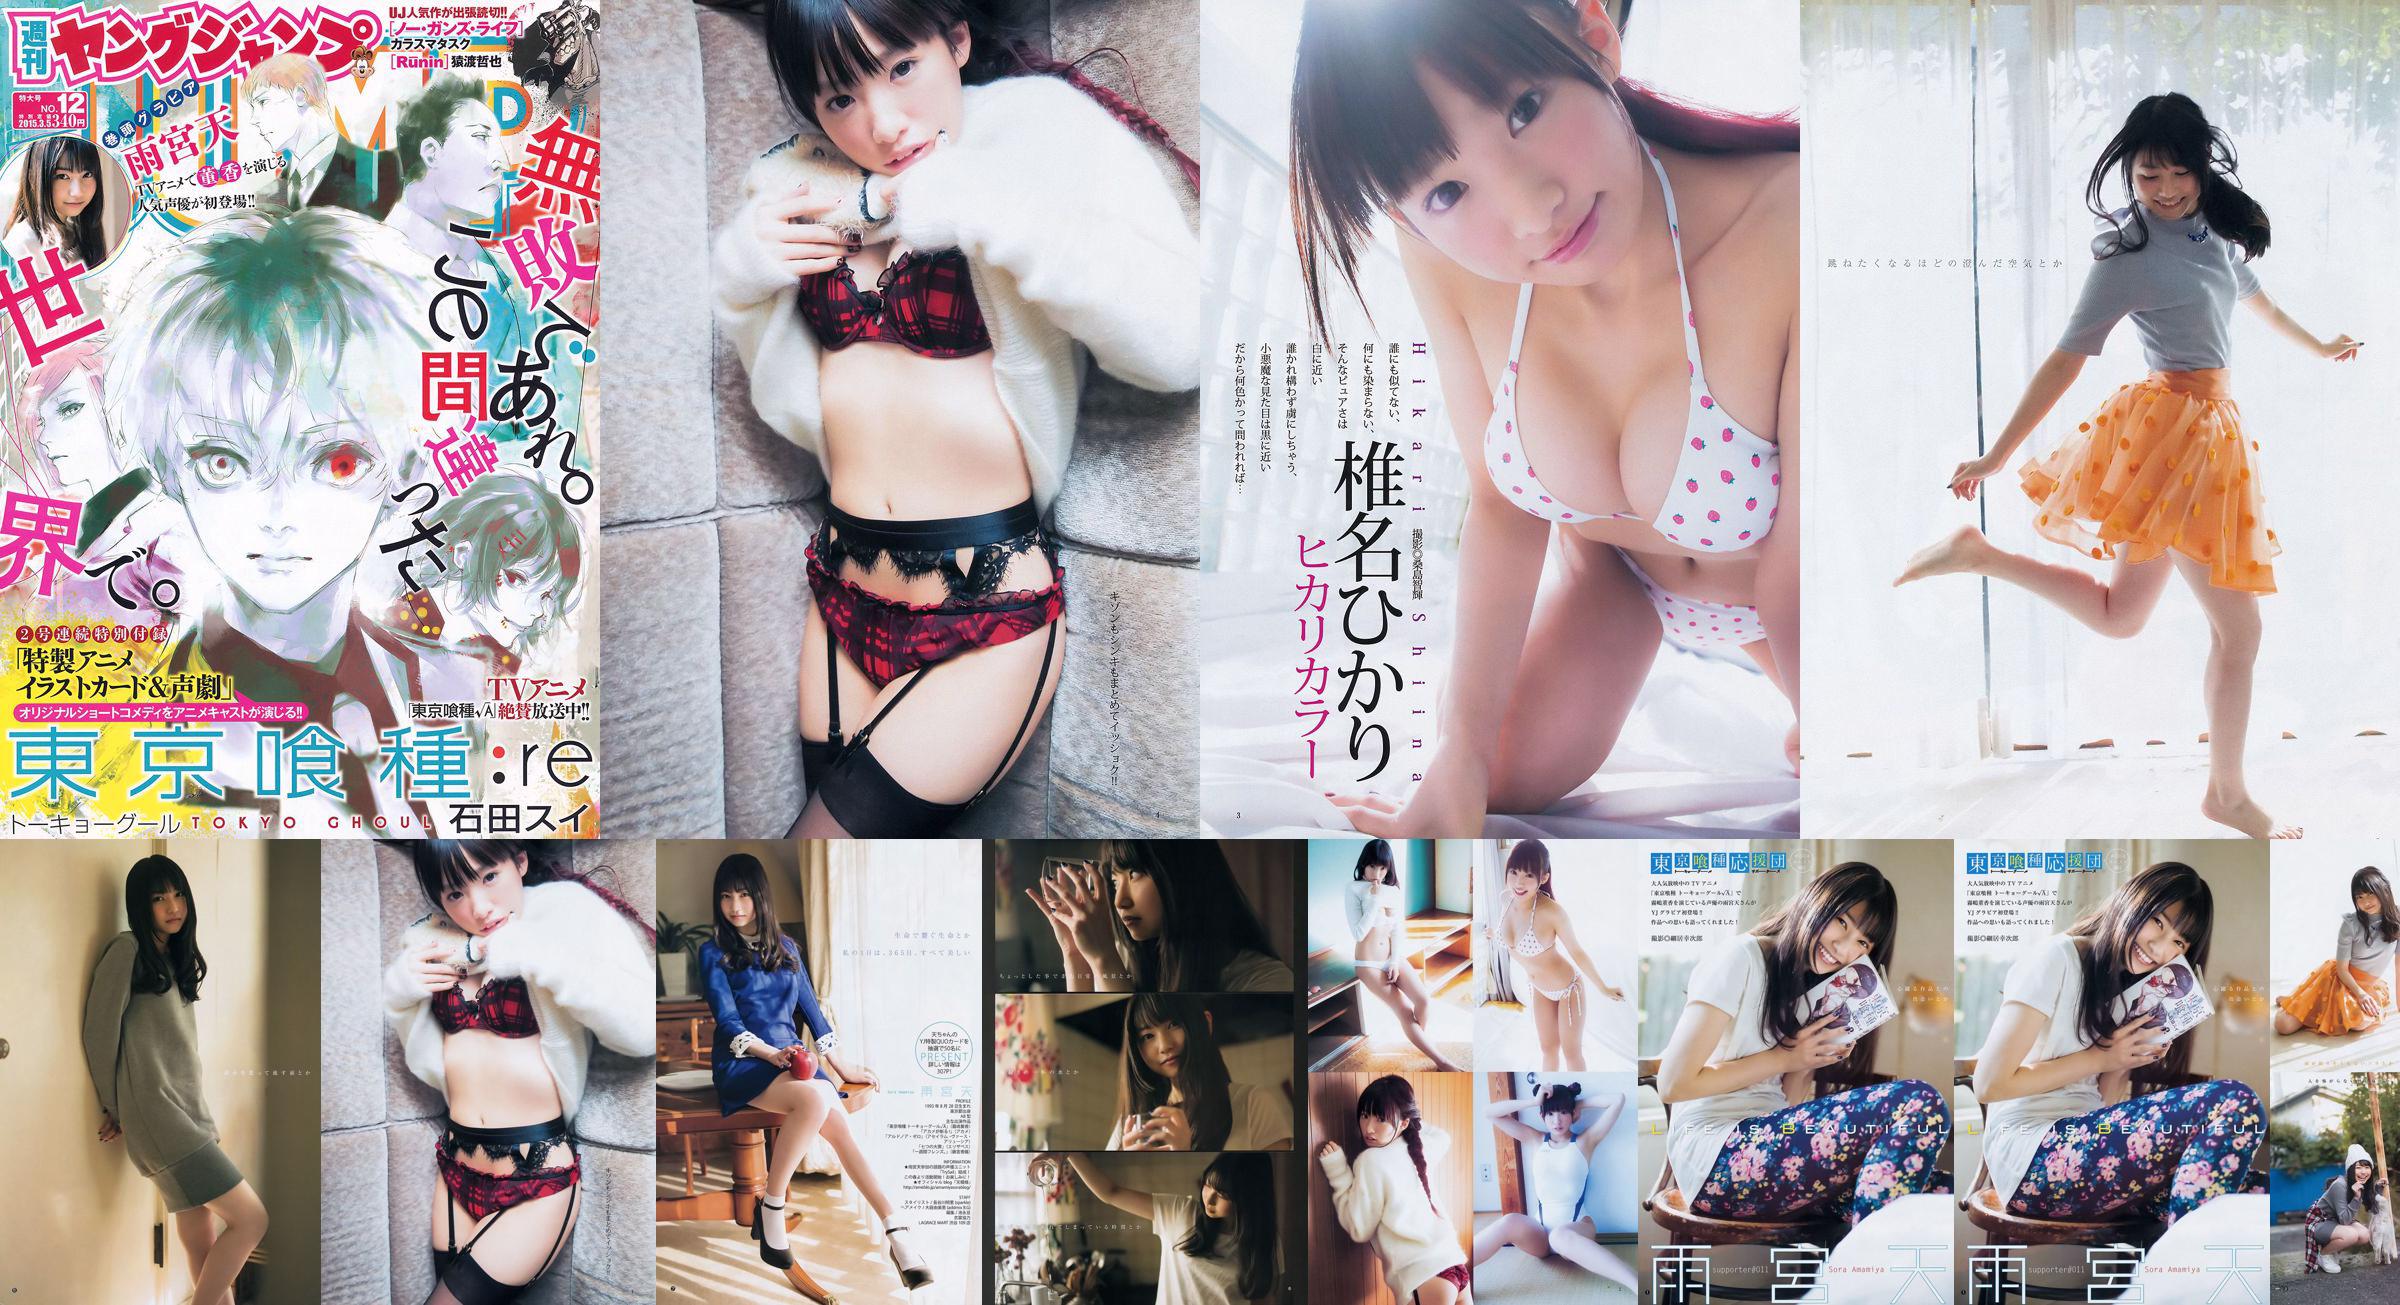 Amamiya Tian Shiina ひ か り [Jeune saut hebdomadaire] 2015 n ° 12 Photo Magazine No.860cc1 Page 7